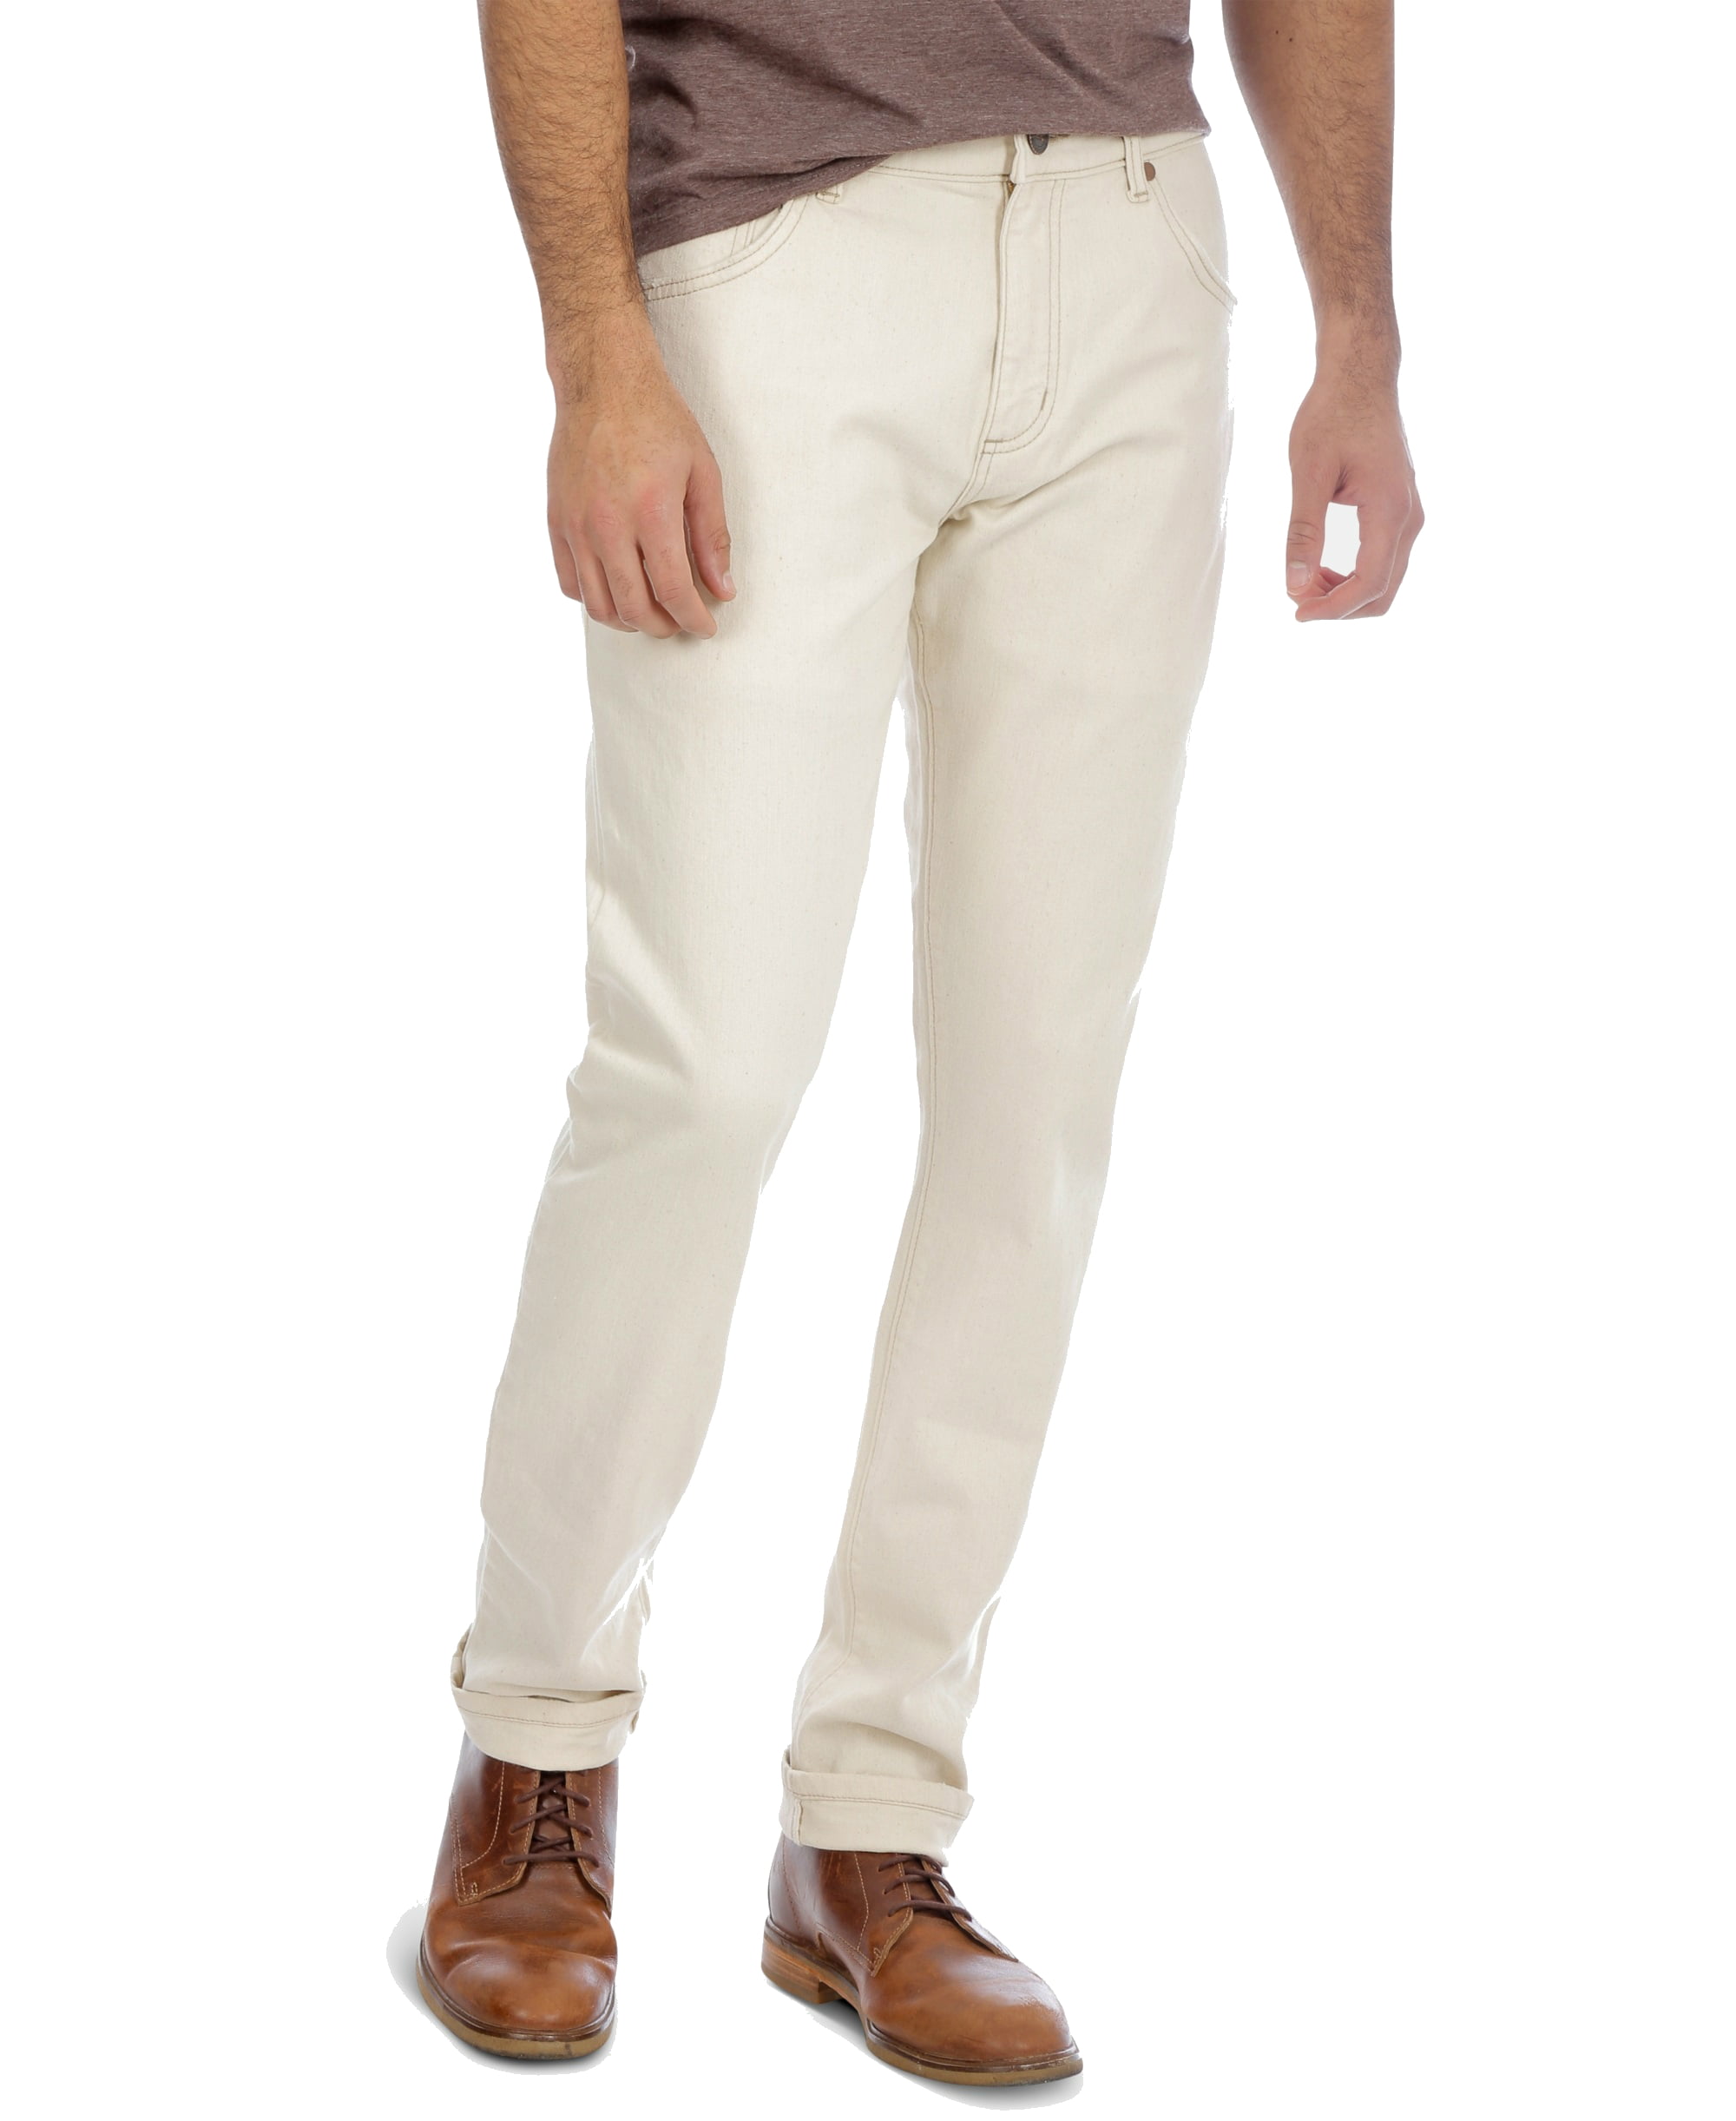 Wrangler Men's Slim Tapered Jeans, Beige, 36Wx30L 